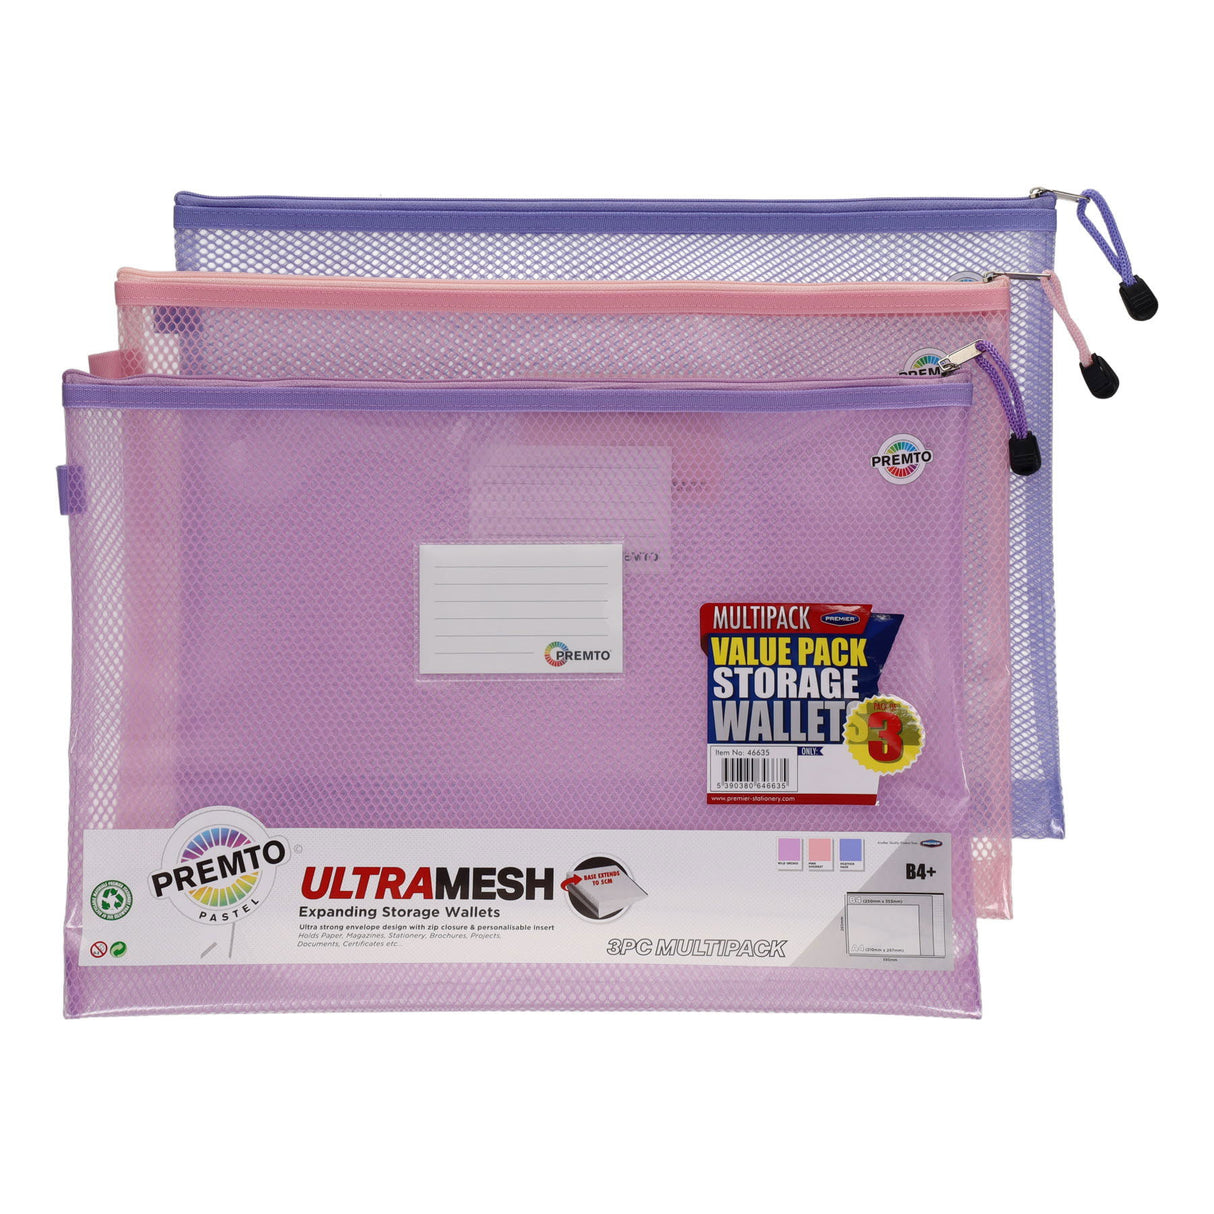 Premto Multipack | Pastel B4+ Ultramesh Expanding Wallet - Pack of 3